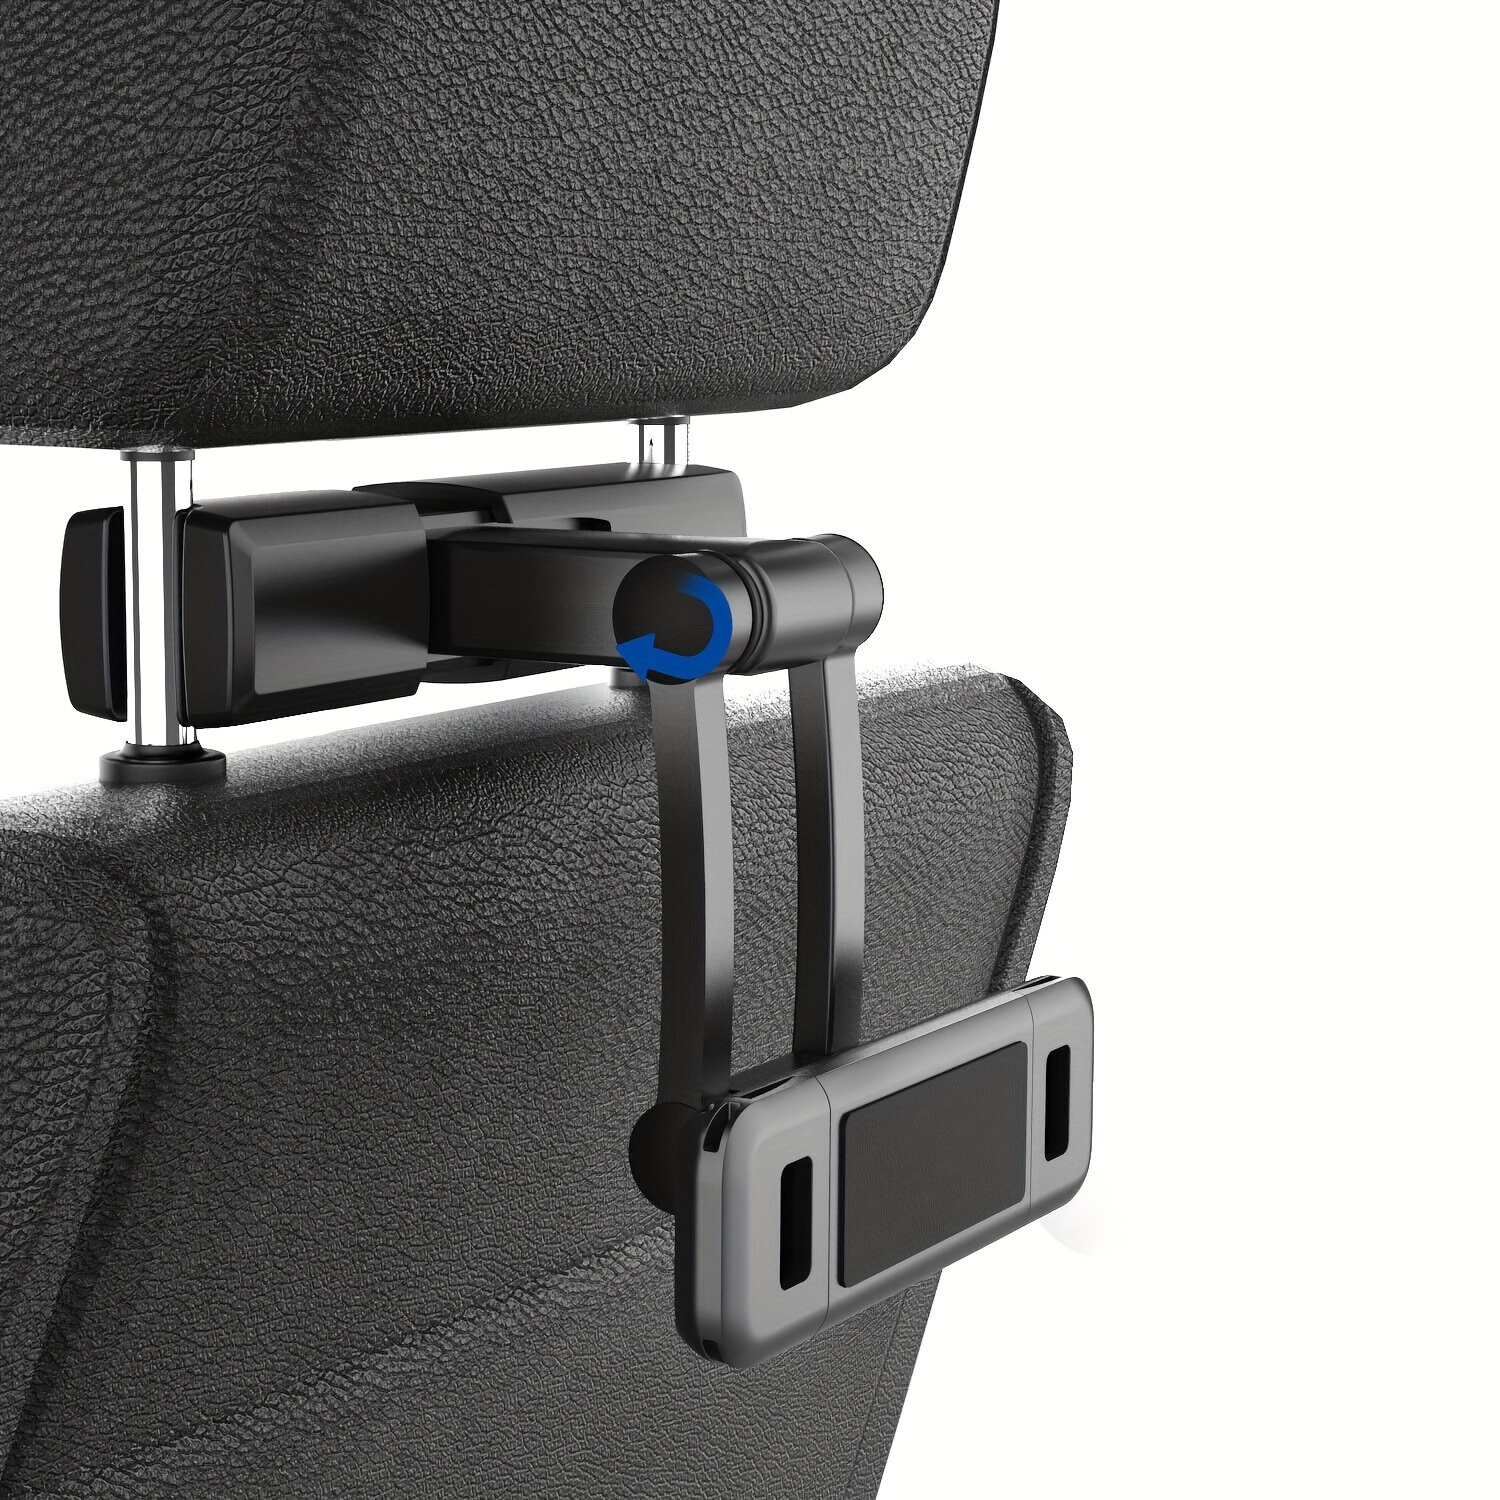 Lilware Universal Car Headrest Holder for Tablet / Apple iPad / e